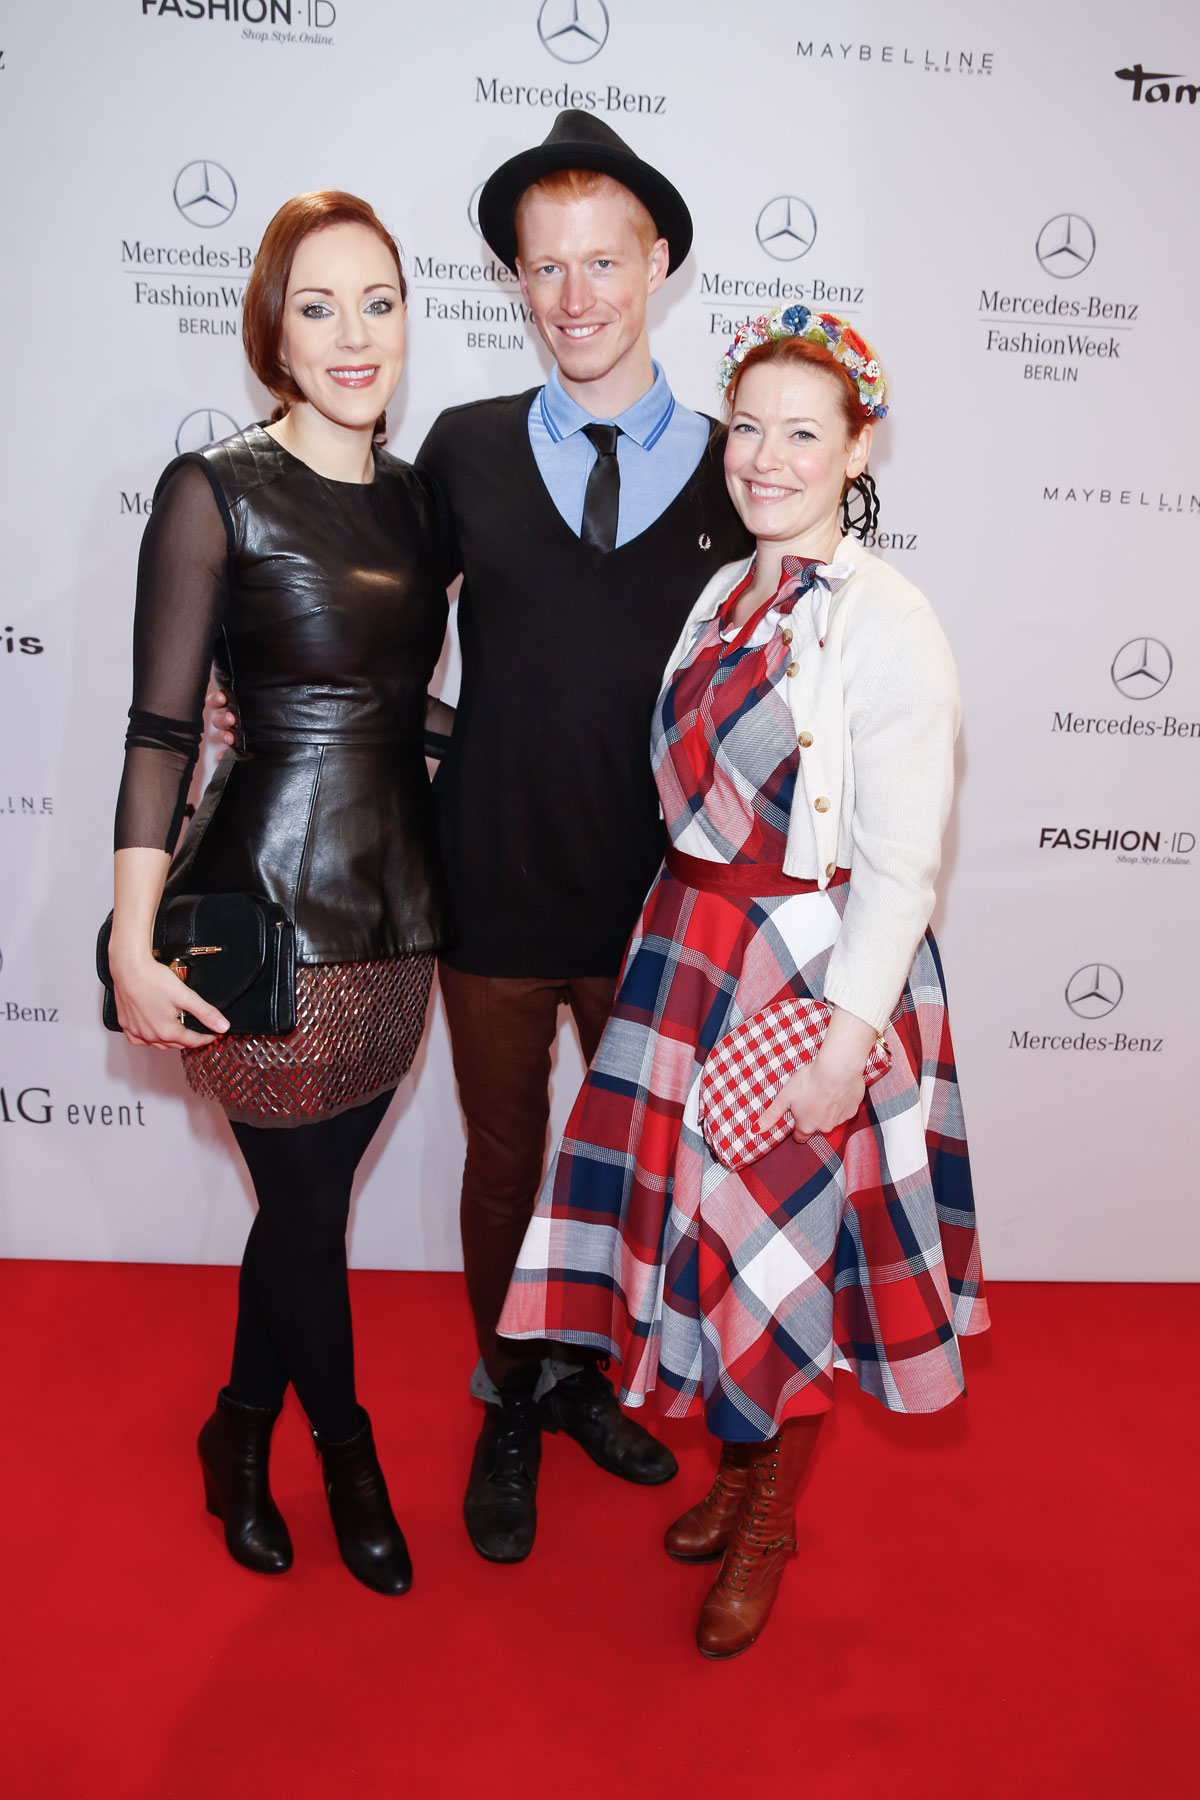 Jasmin Wagner attends Mercedes-Benz Fashion Week